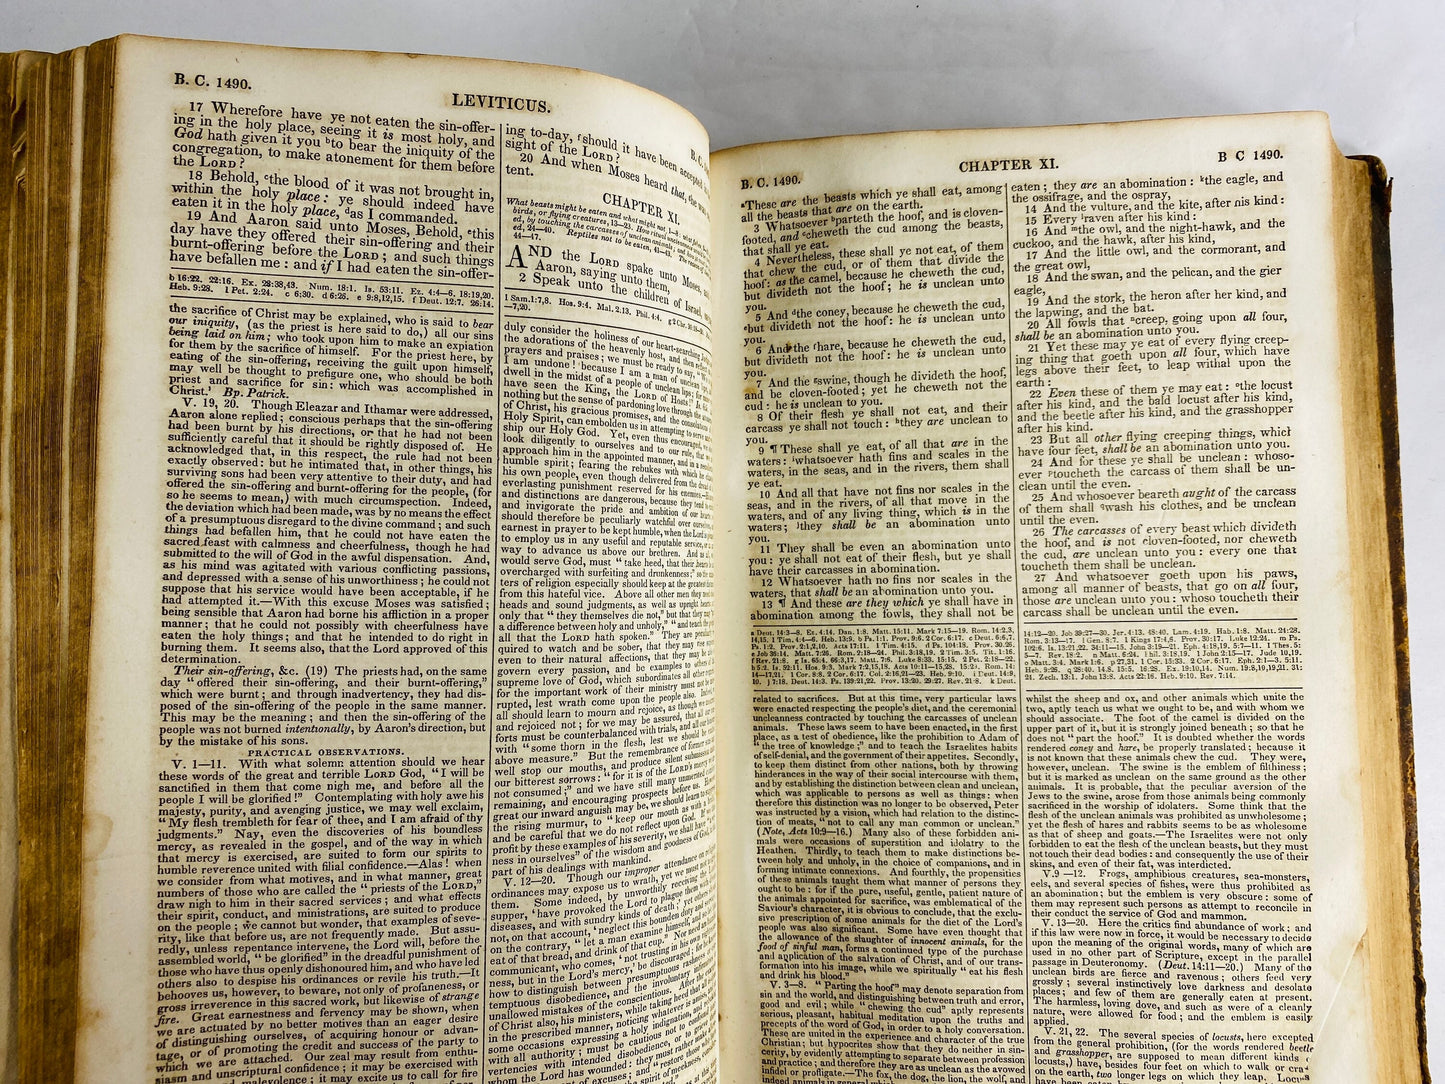 1848 Holy Bible vol 1 New York Thomas Scott John Brown Scotland church minister Haddington Church Worn leather cover New & Old Testaments